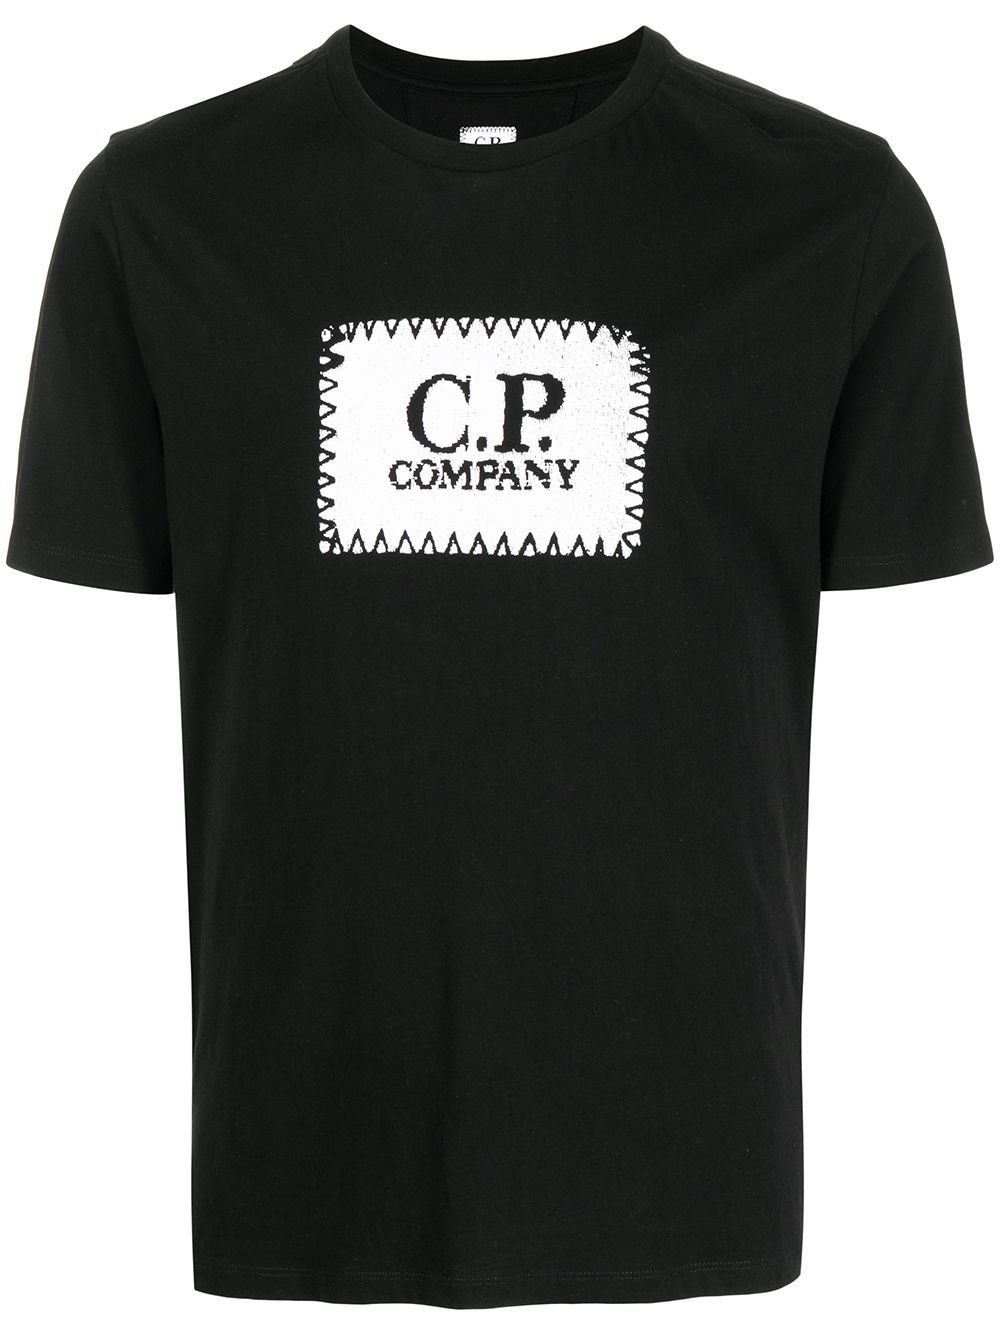 фото C.p. company футболка с логотипом